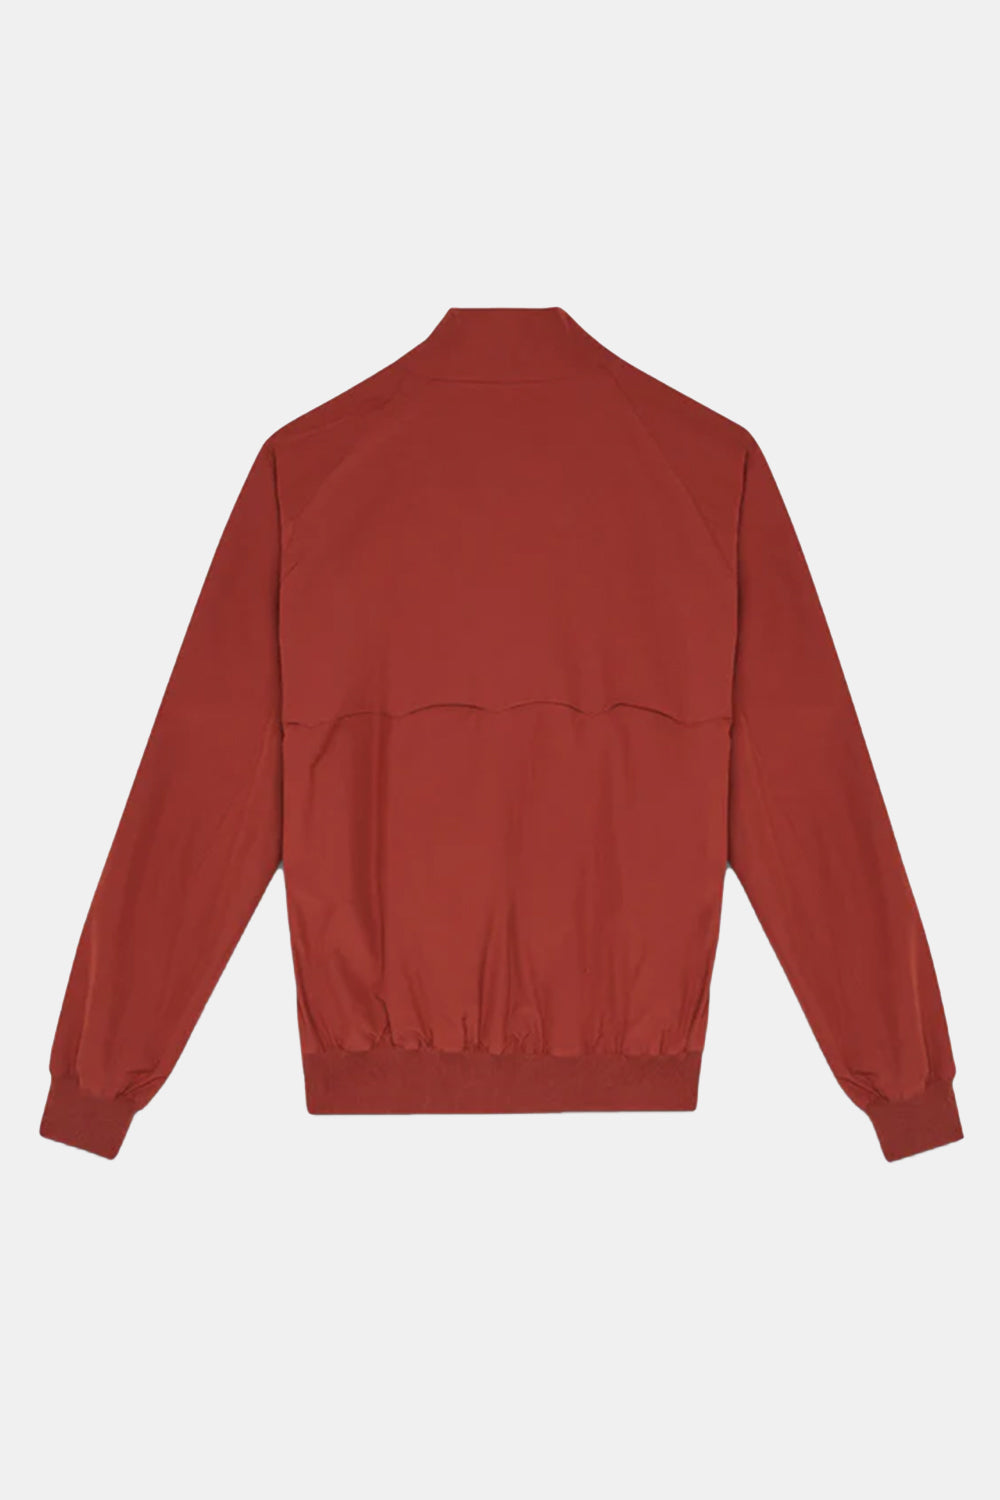 Baracuta G9 Classic Cotton-Blend Harrington Jacket (Brick Red)